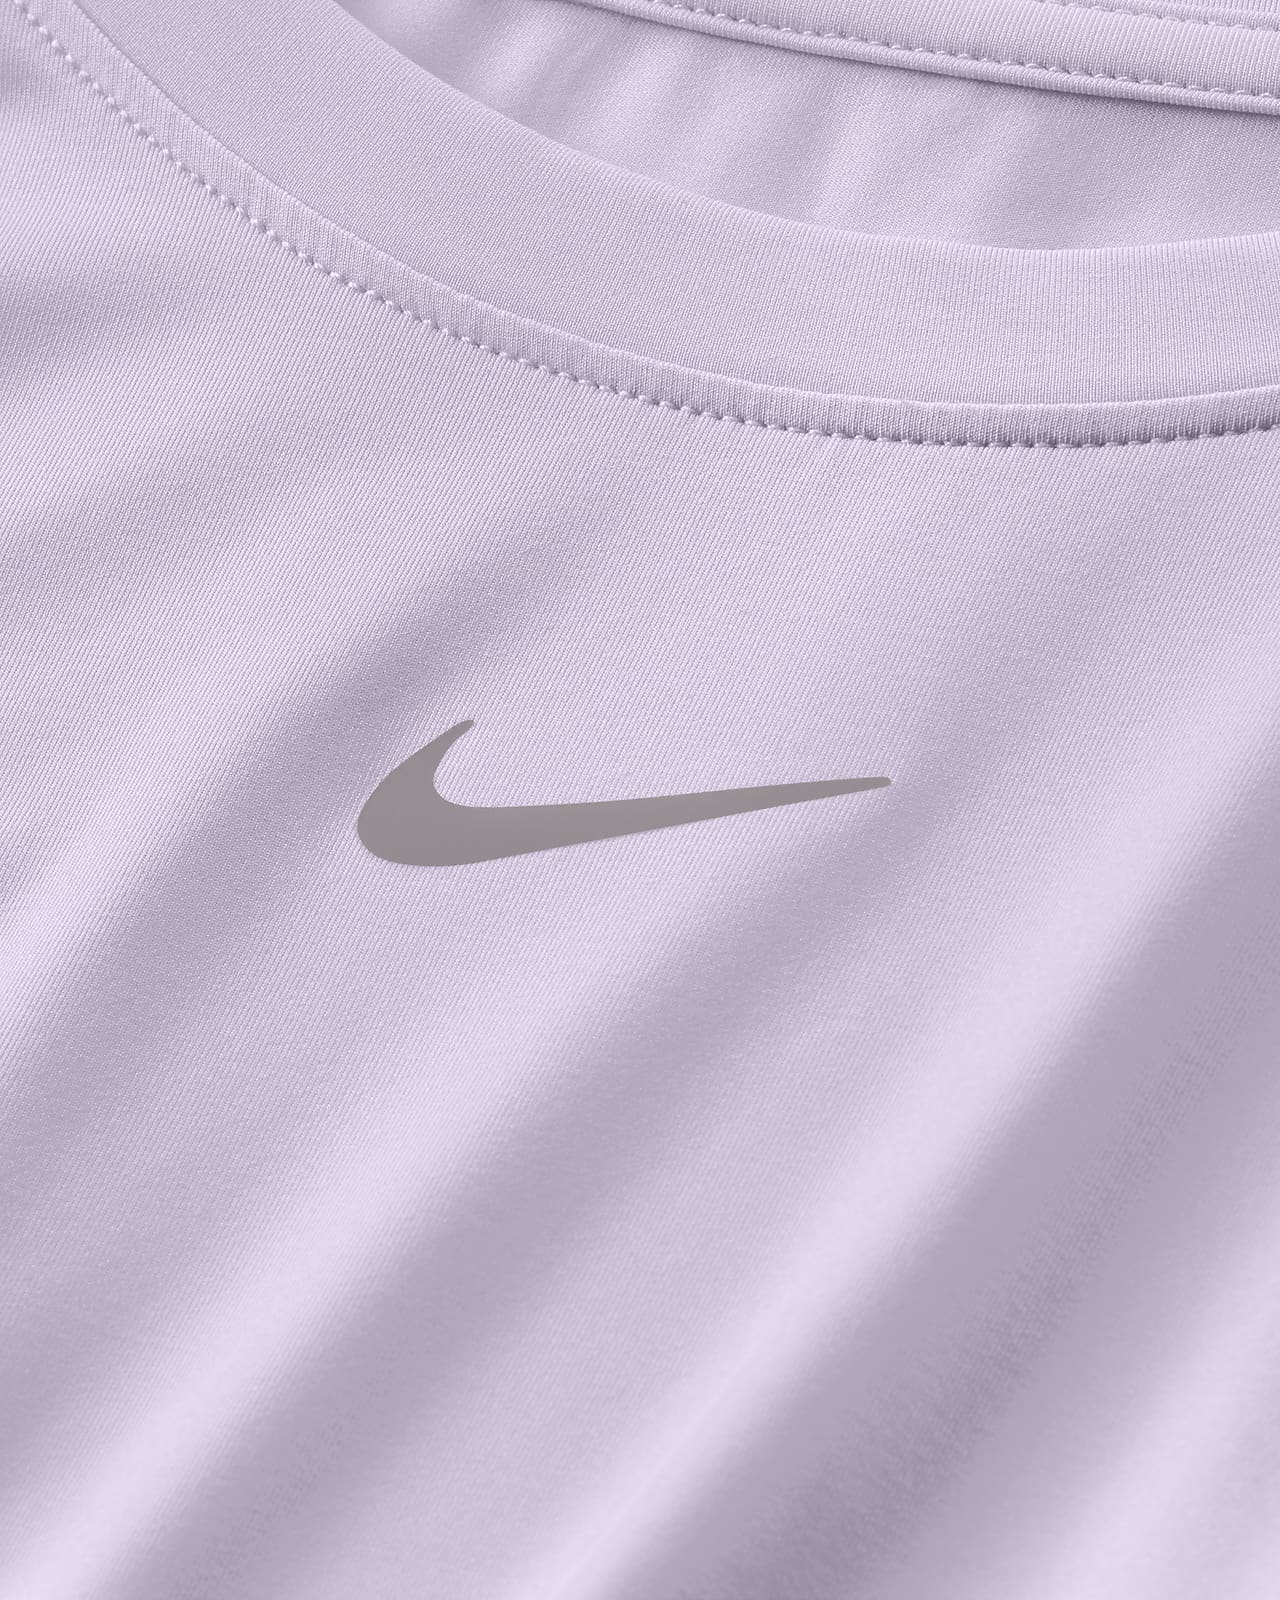 Nike Women's Dri-FIT One Printed Training Tank Top (Plus Size) in